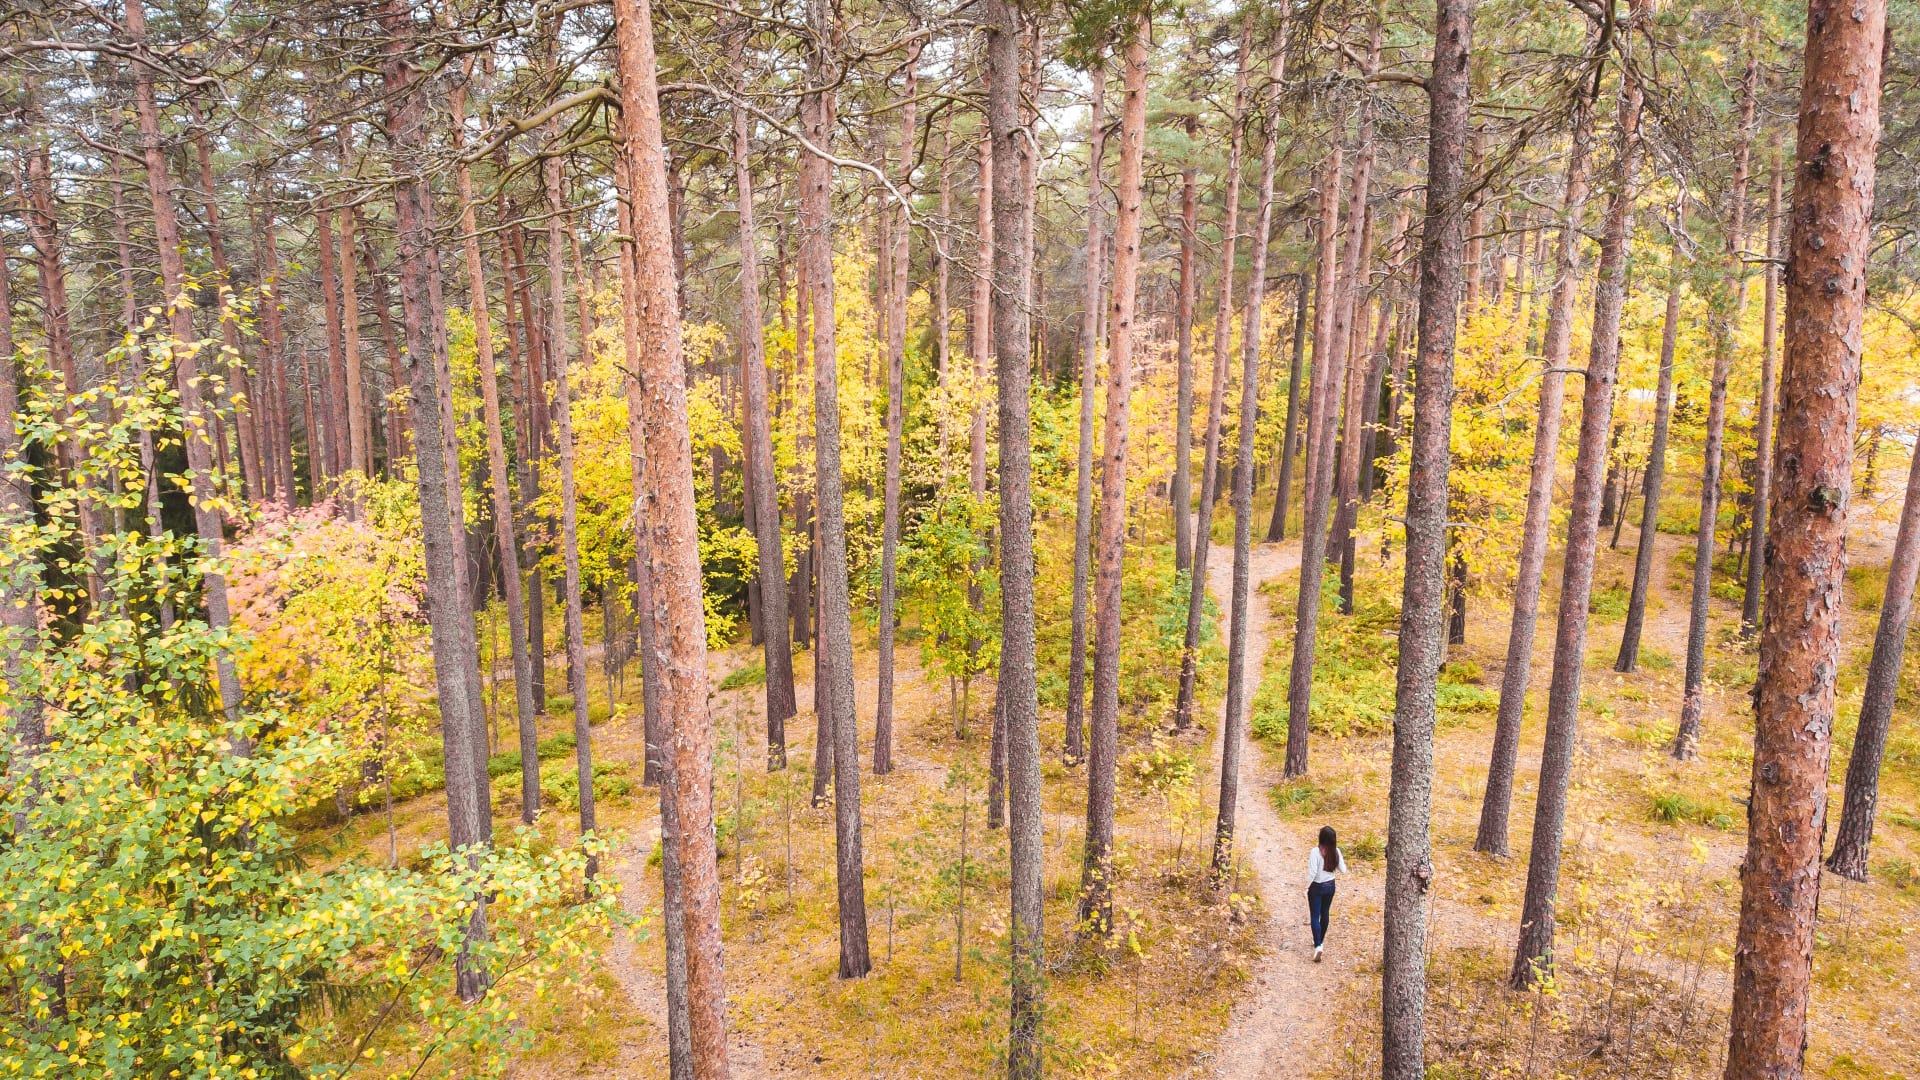 Trails in the Pyynikki forest.